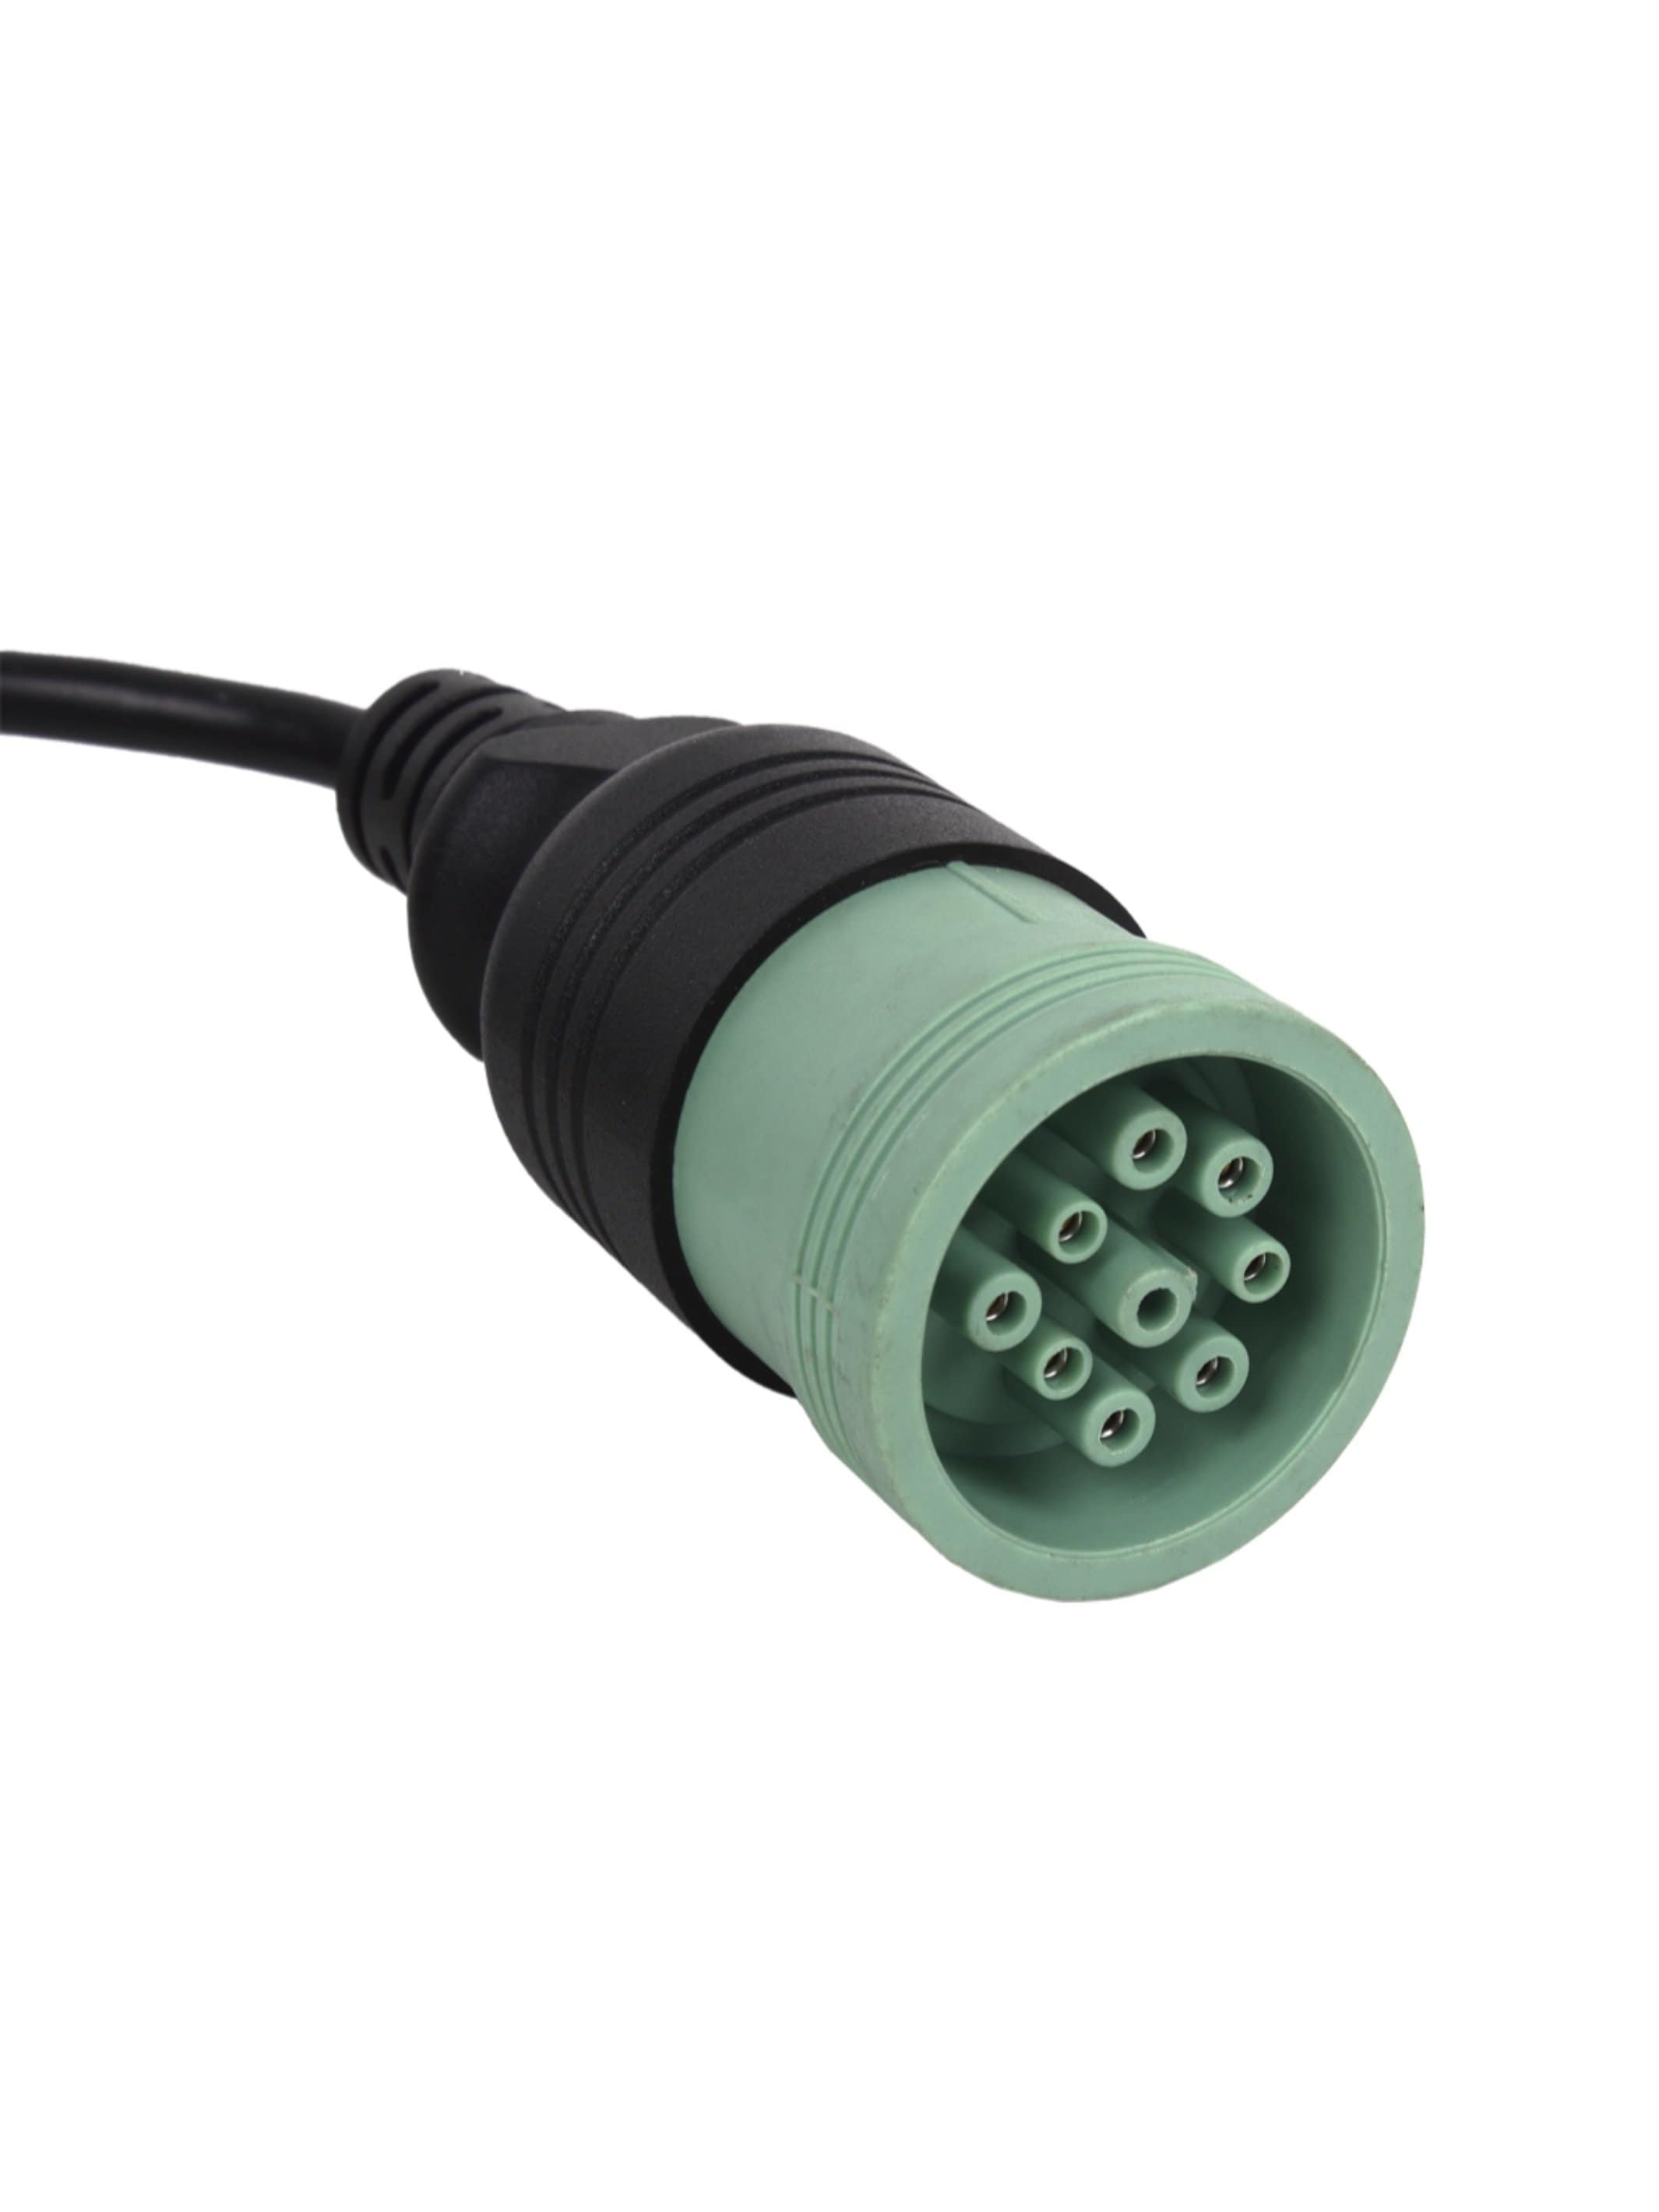 JDC217.9 Deutsch 9 pin type 2 green diagnostics cable - Bundle - Jaltest Agricultural, Commercial Vehicles, Construction, MH, Power Systems Diagnostic Kit